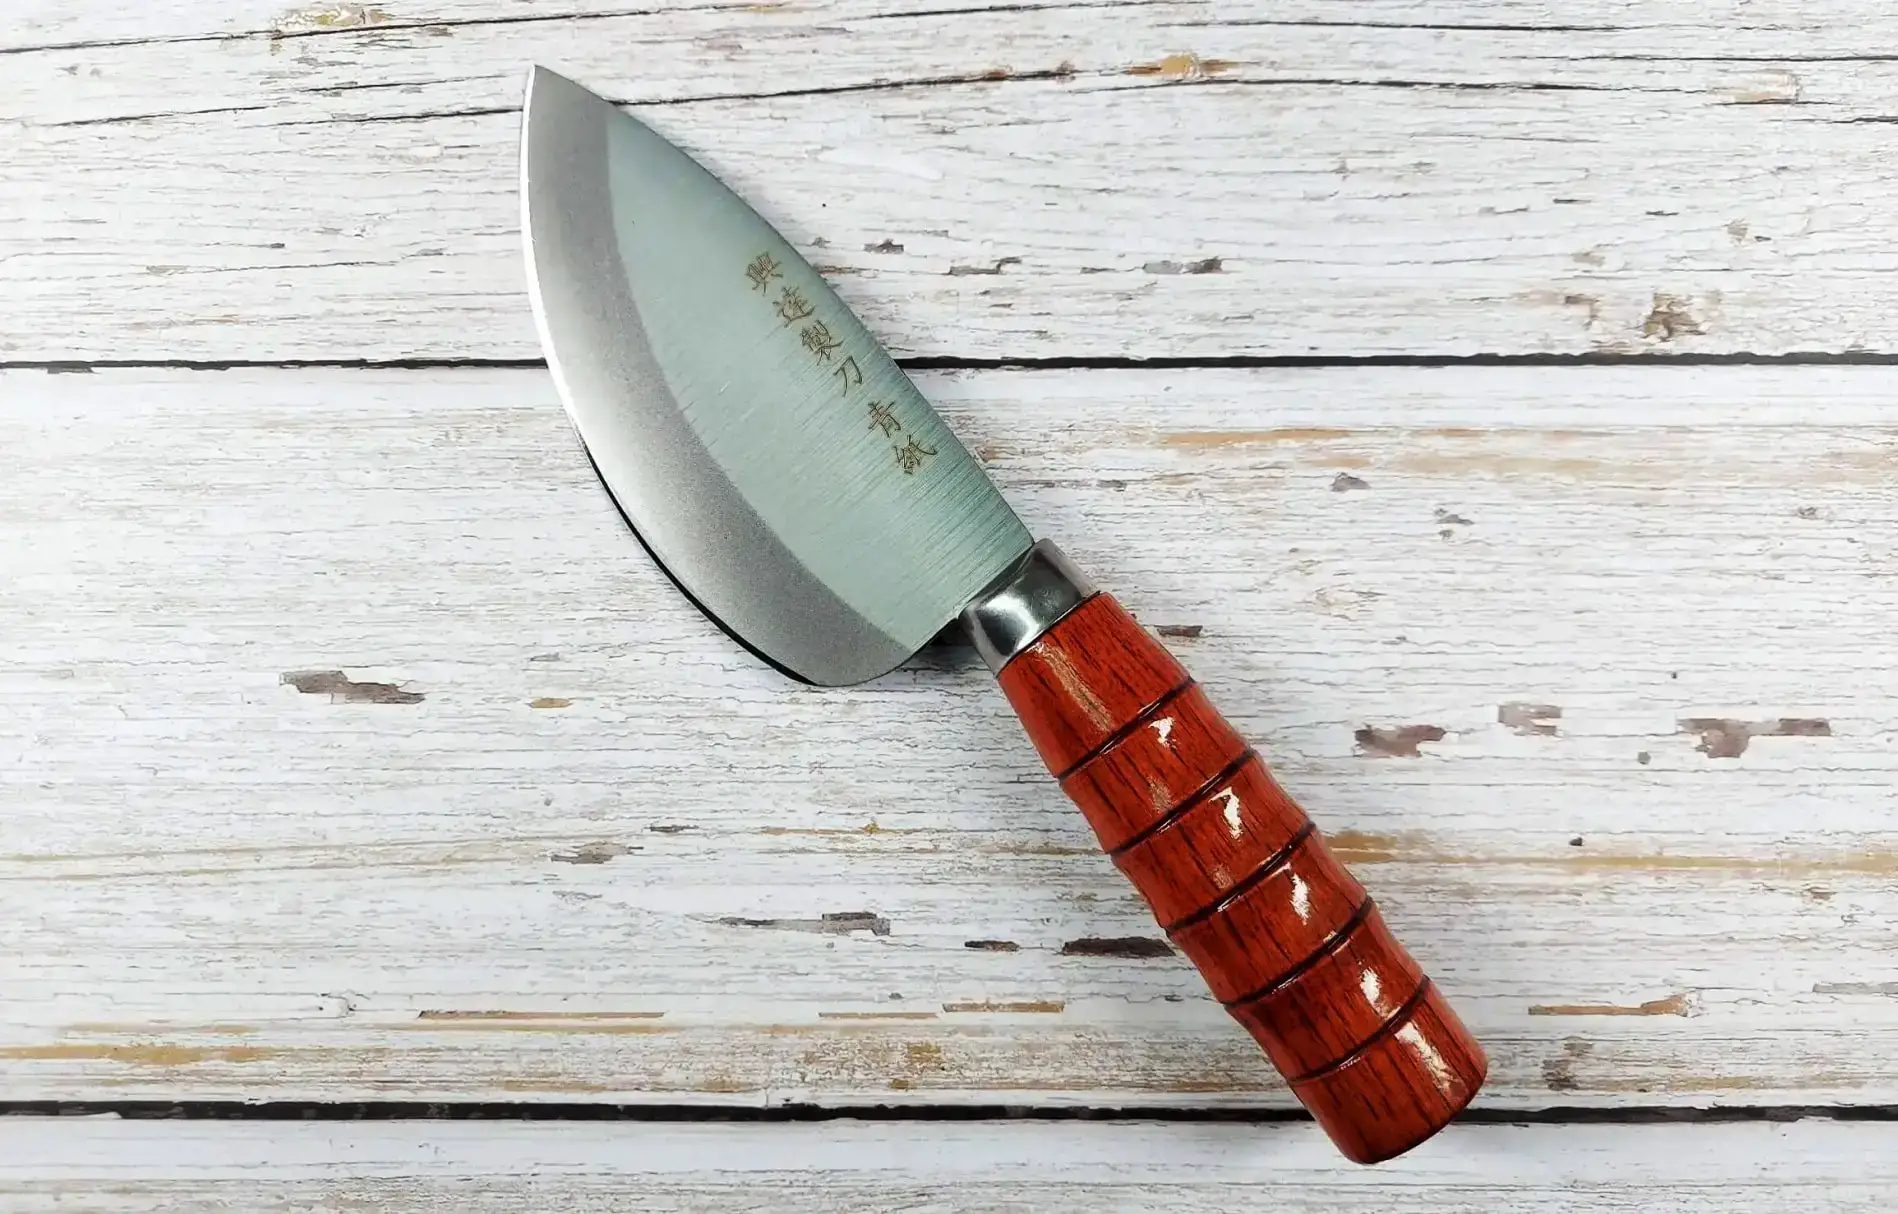 Master Kuo G3 Mini Butchering & Fish Knife - Taiwan Tuna Knife